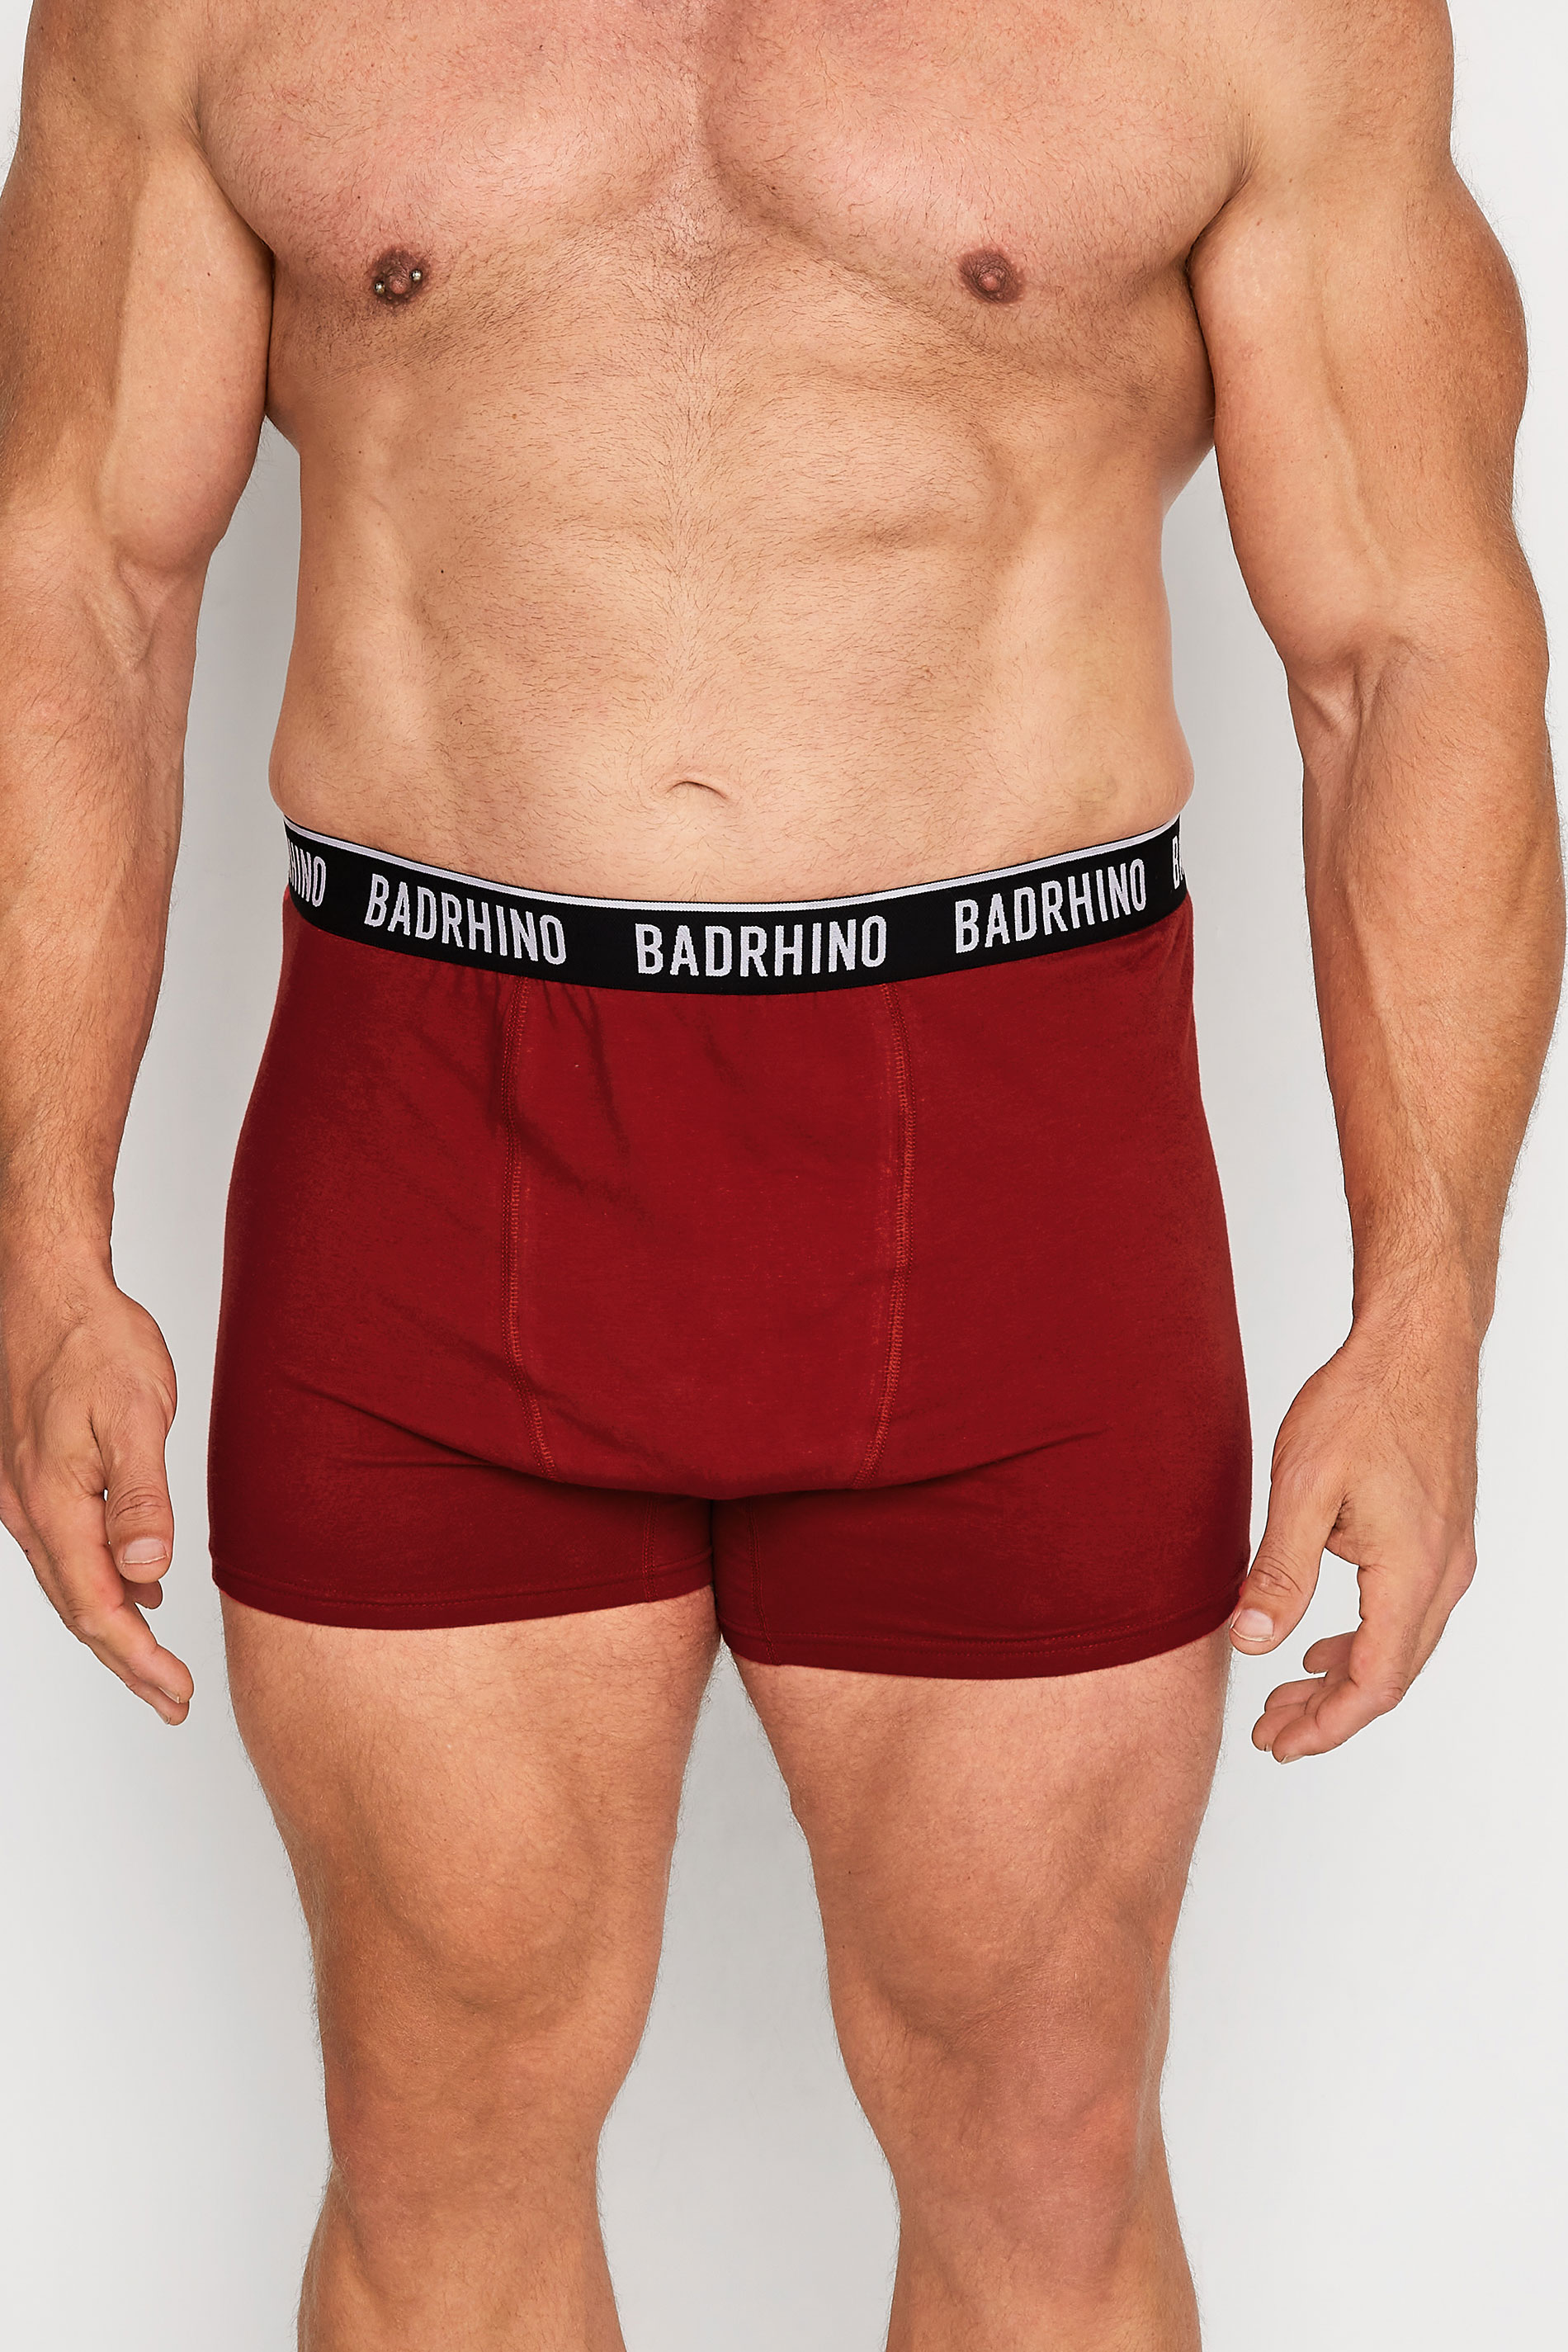 BadRhino Big & Tall 3 Pack Black/Red/Blue Boxers | BadRhino 3